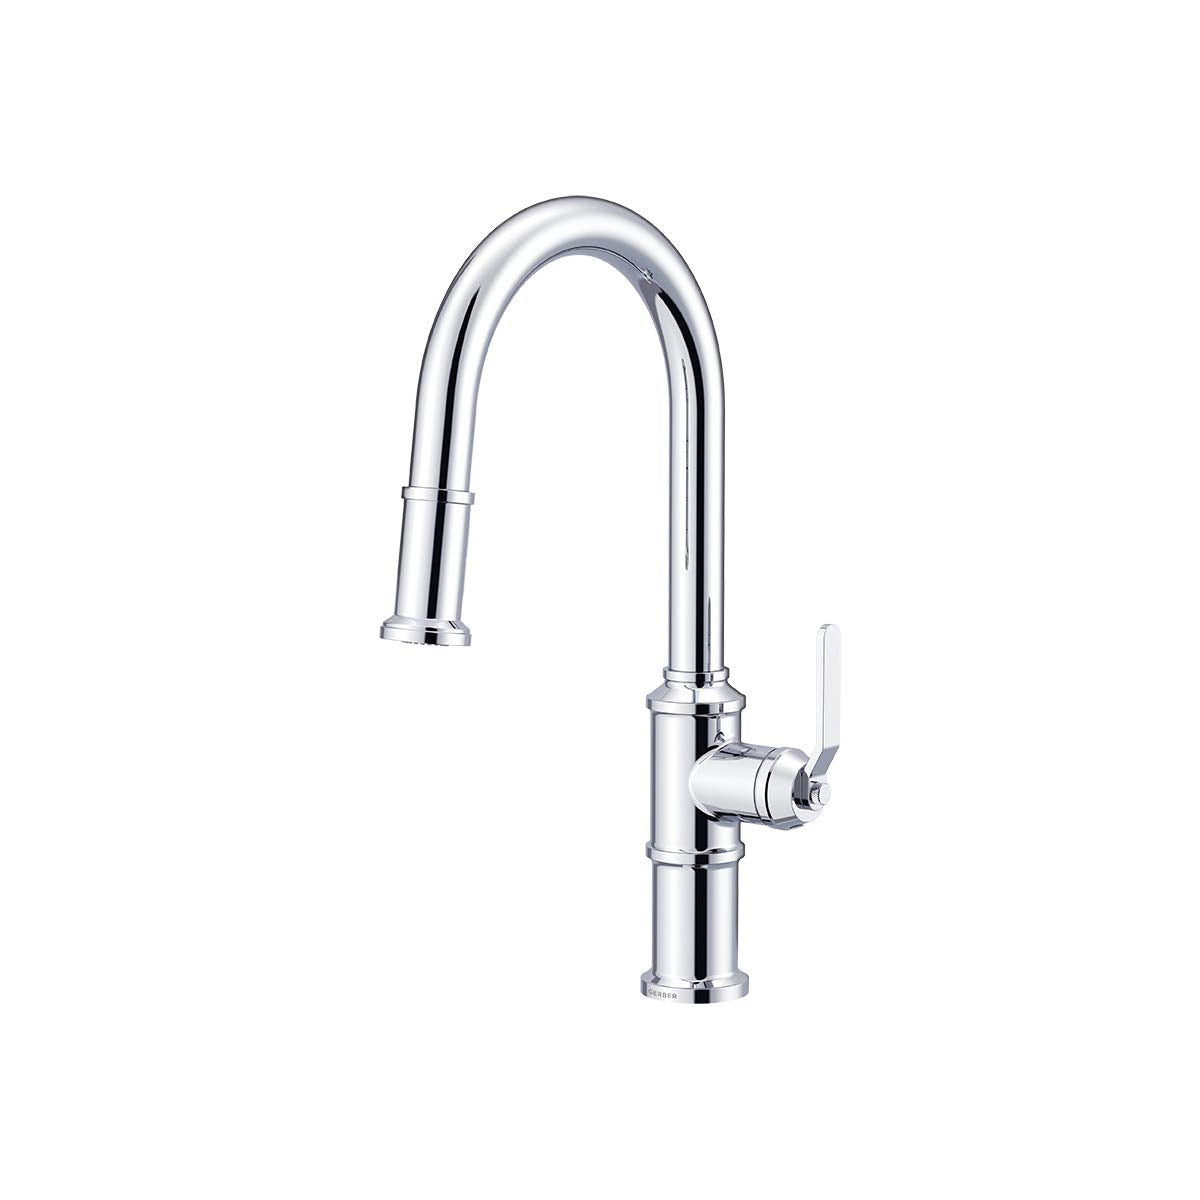 Gerber D454437 Chrome Kinzie Single Handle Pull-down Kitchen Faucet